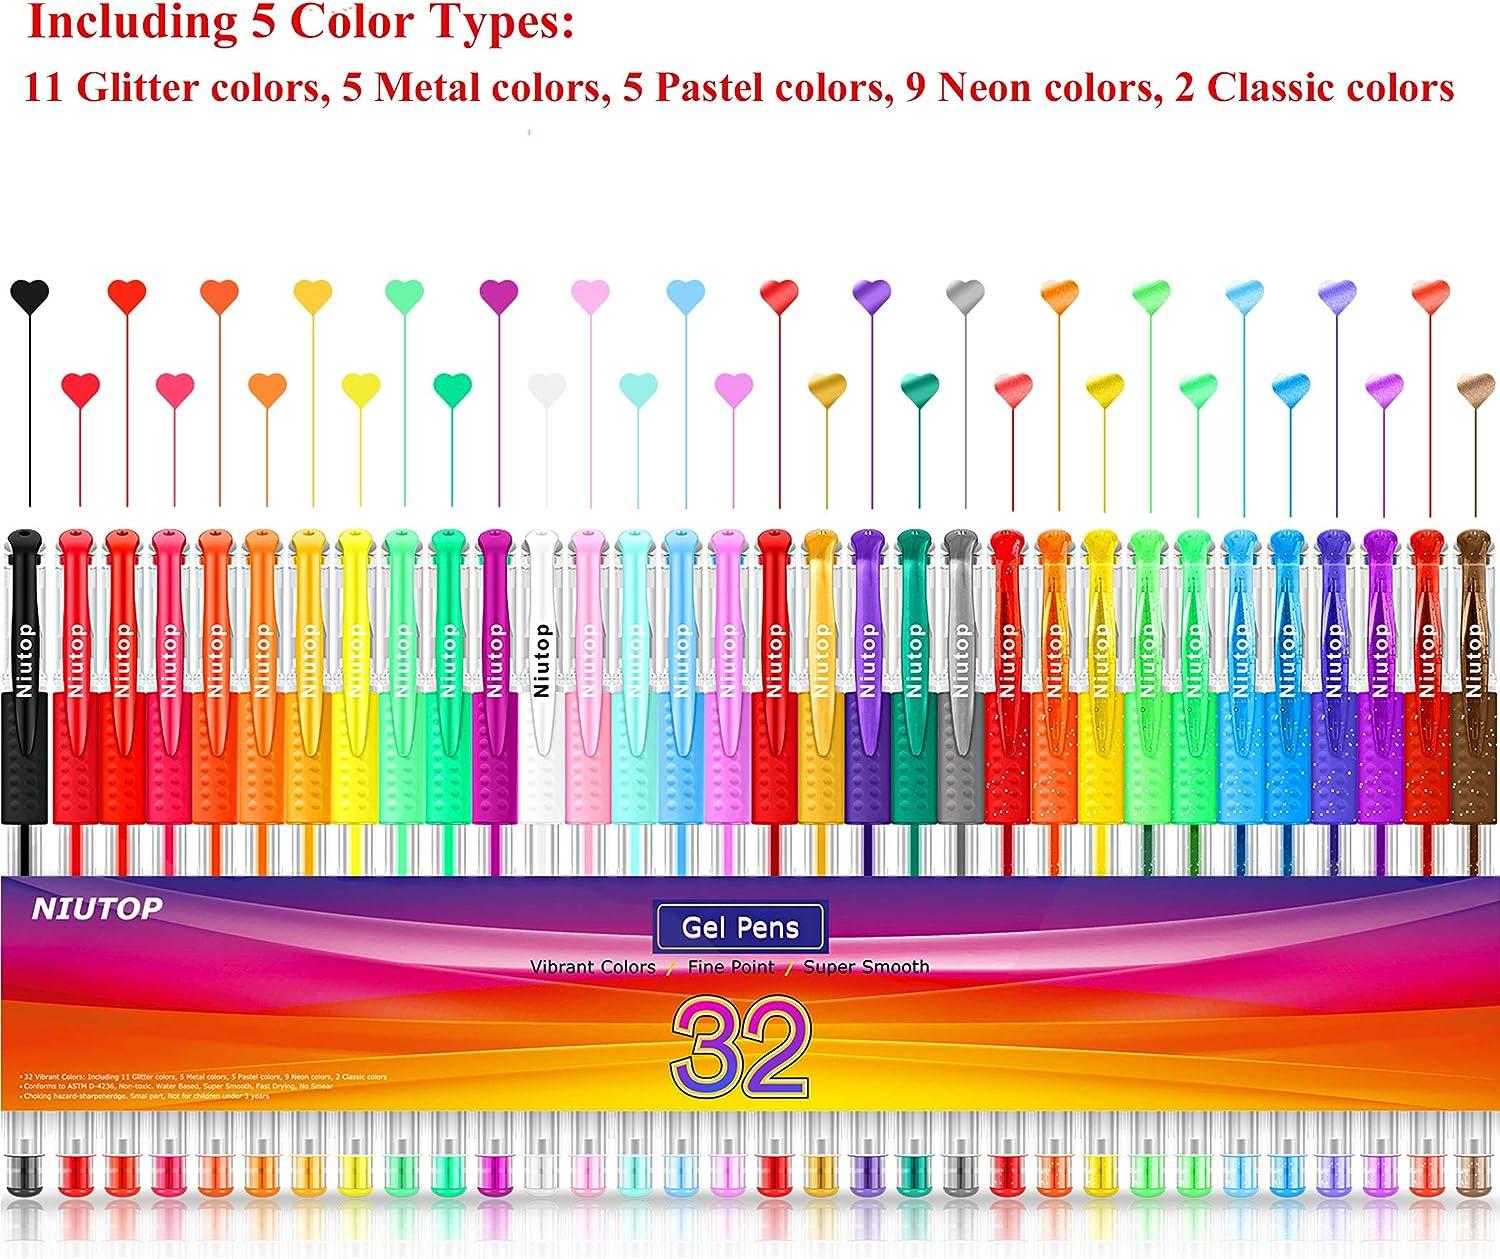 Glitter Gel Pens 32-Color Neon Glitter Pens Fine Tip Art Markers Set 40%  More